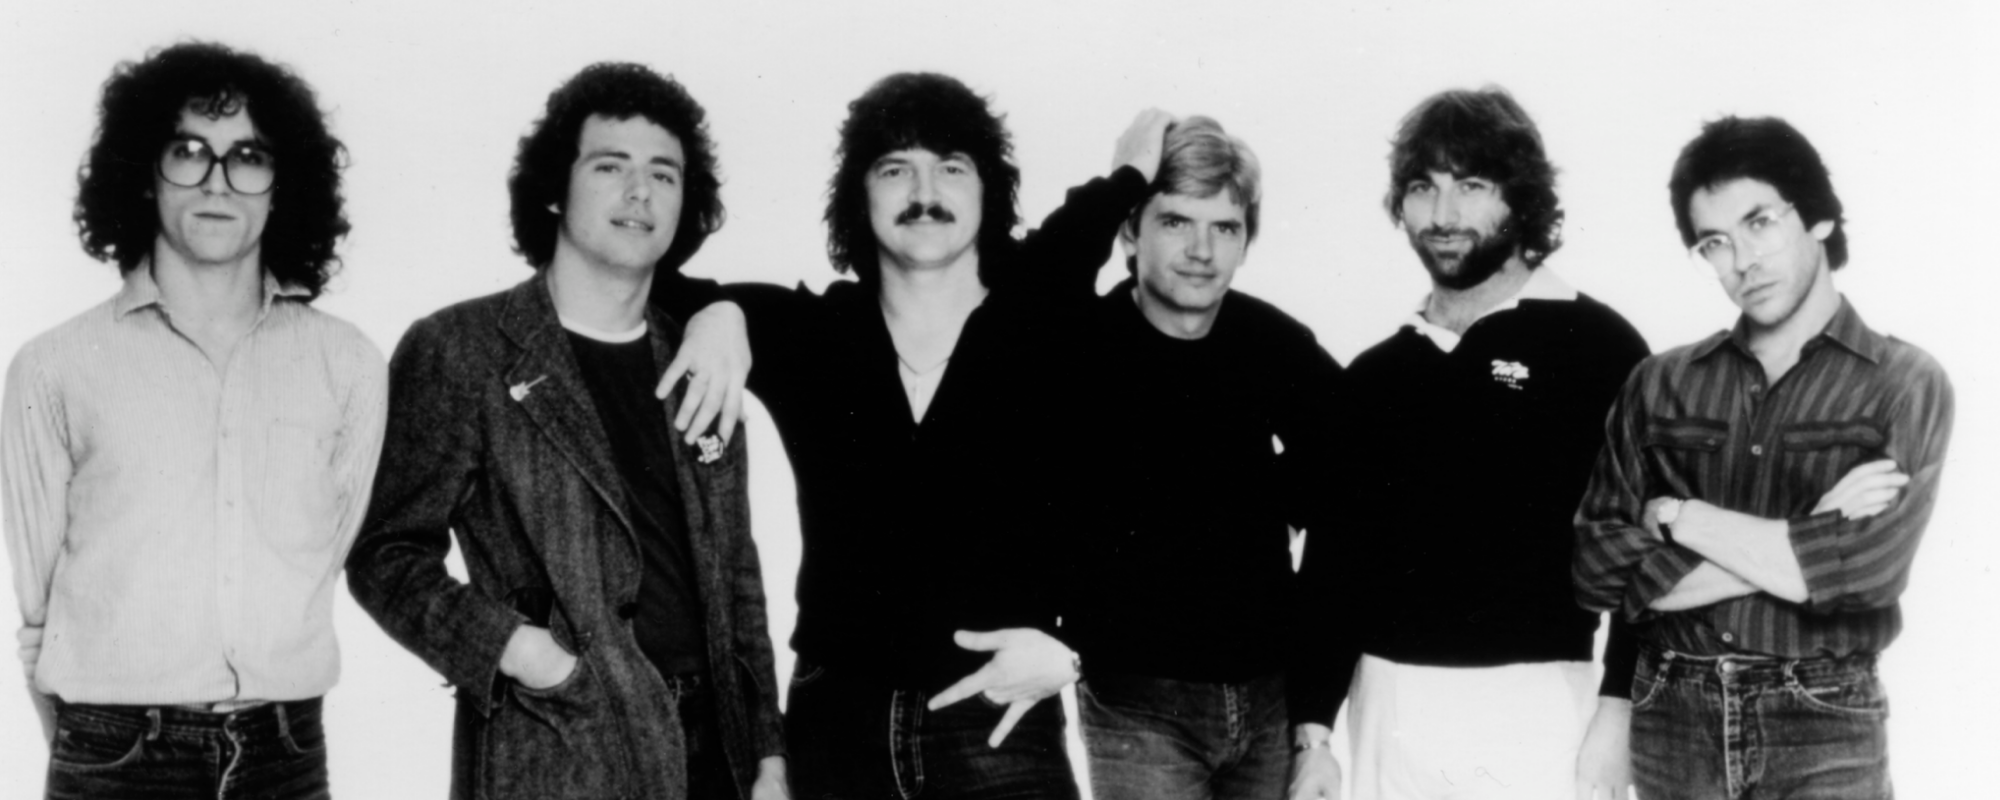 Toto Talks ‘Toto’ to Celebrate Their Debut Album’s 45th Anniversary